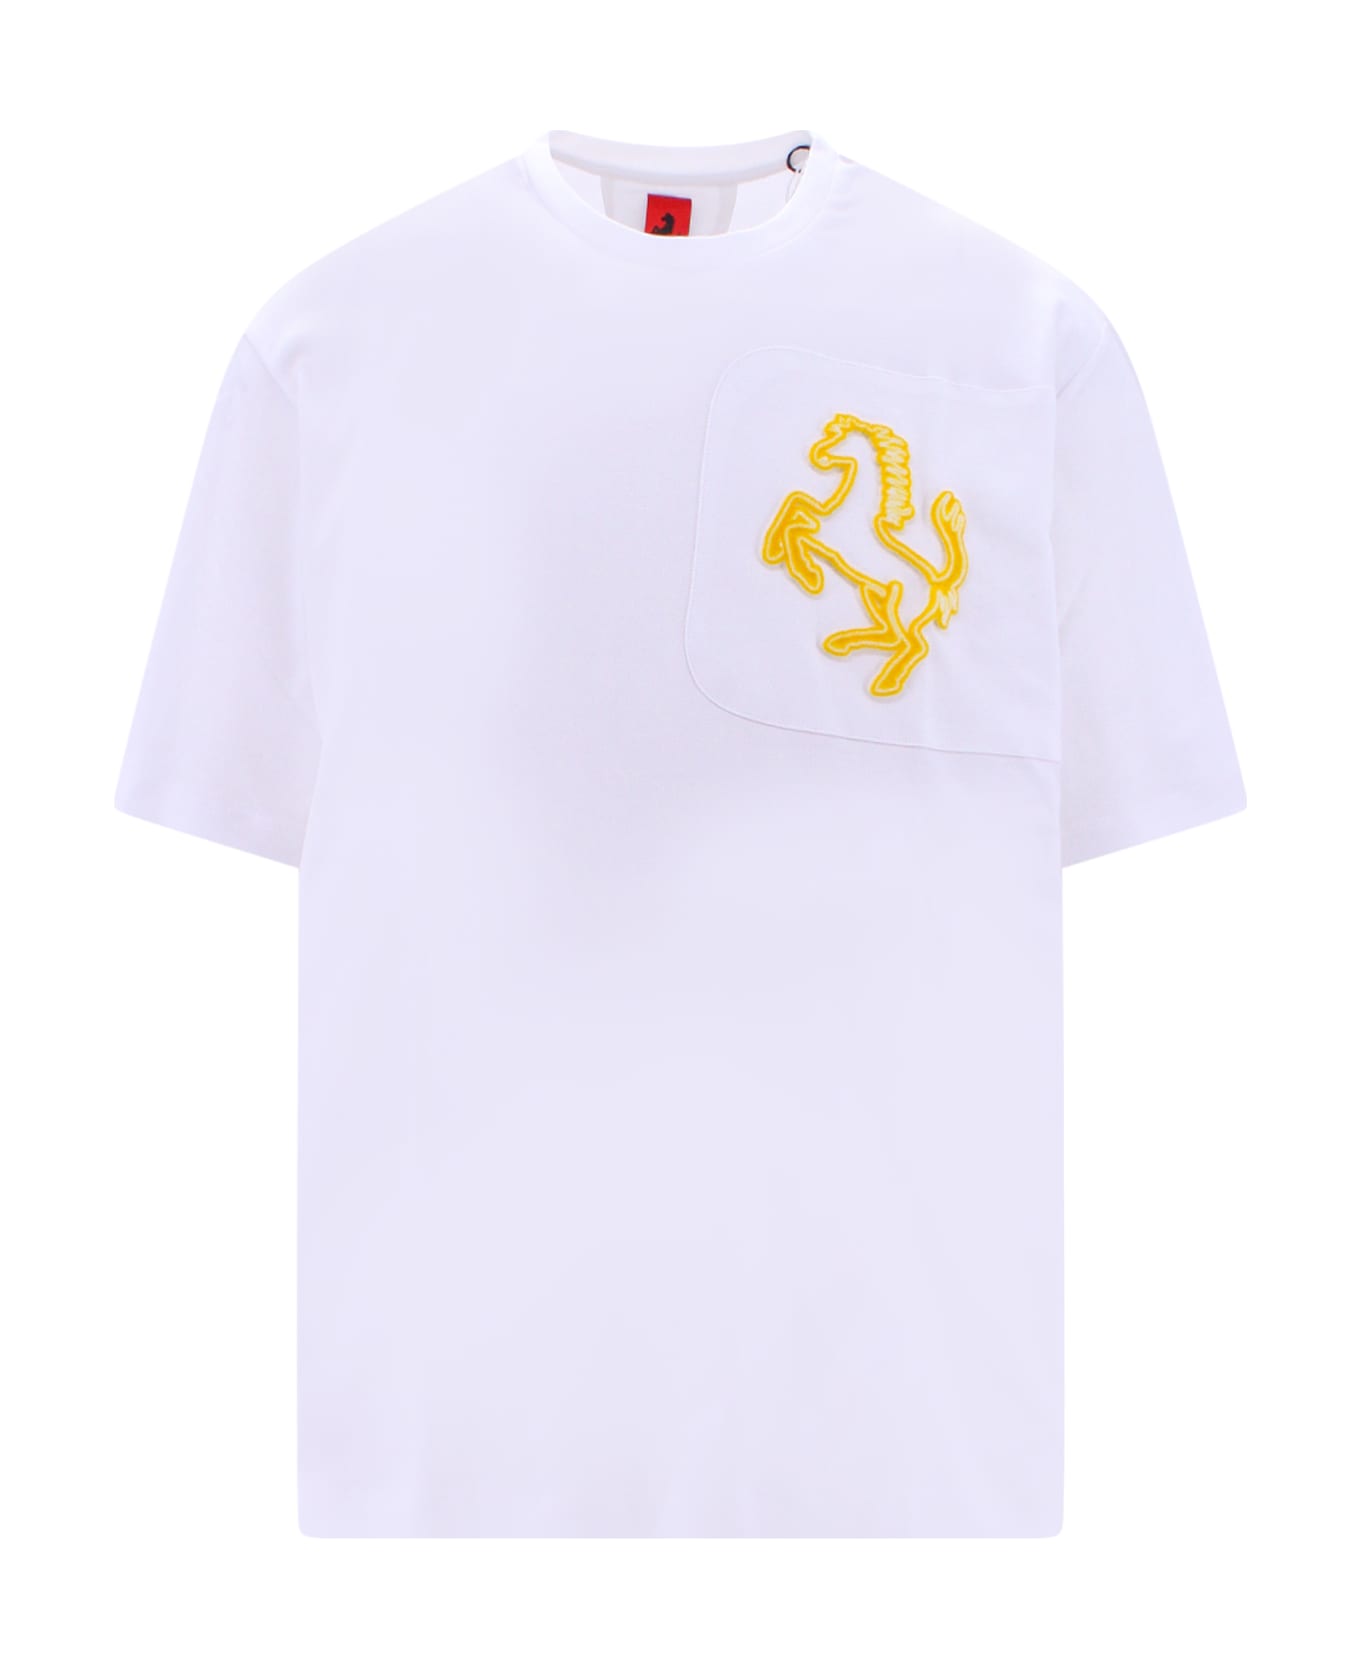 Ferrari T-shirt シャツ